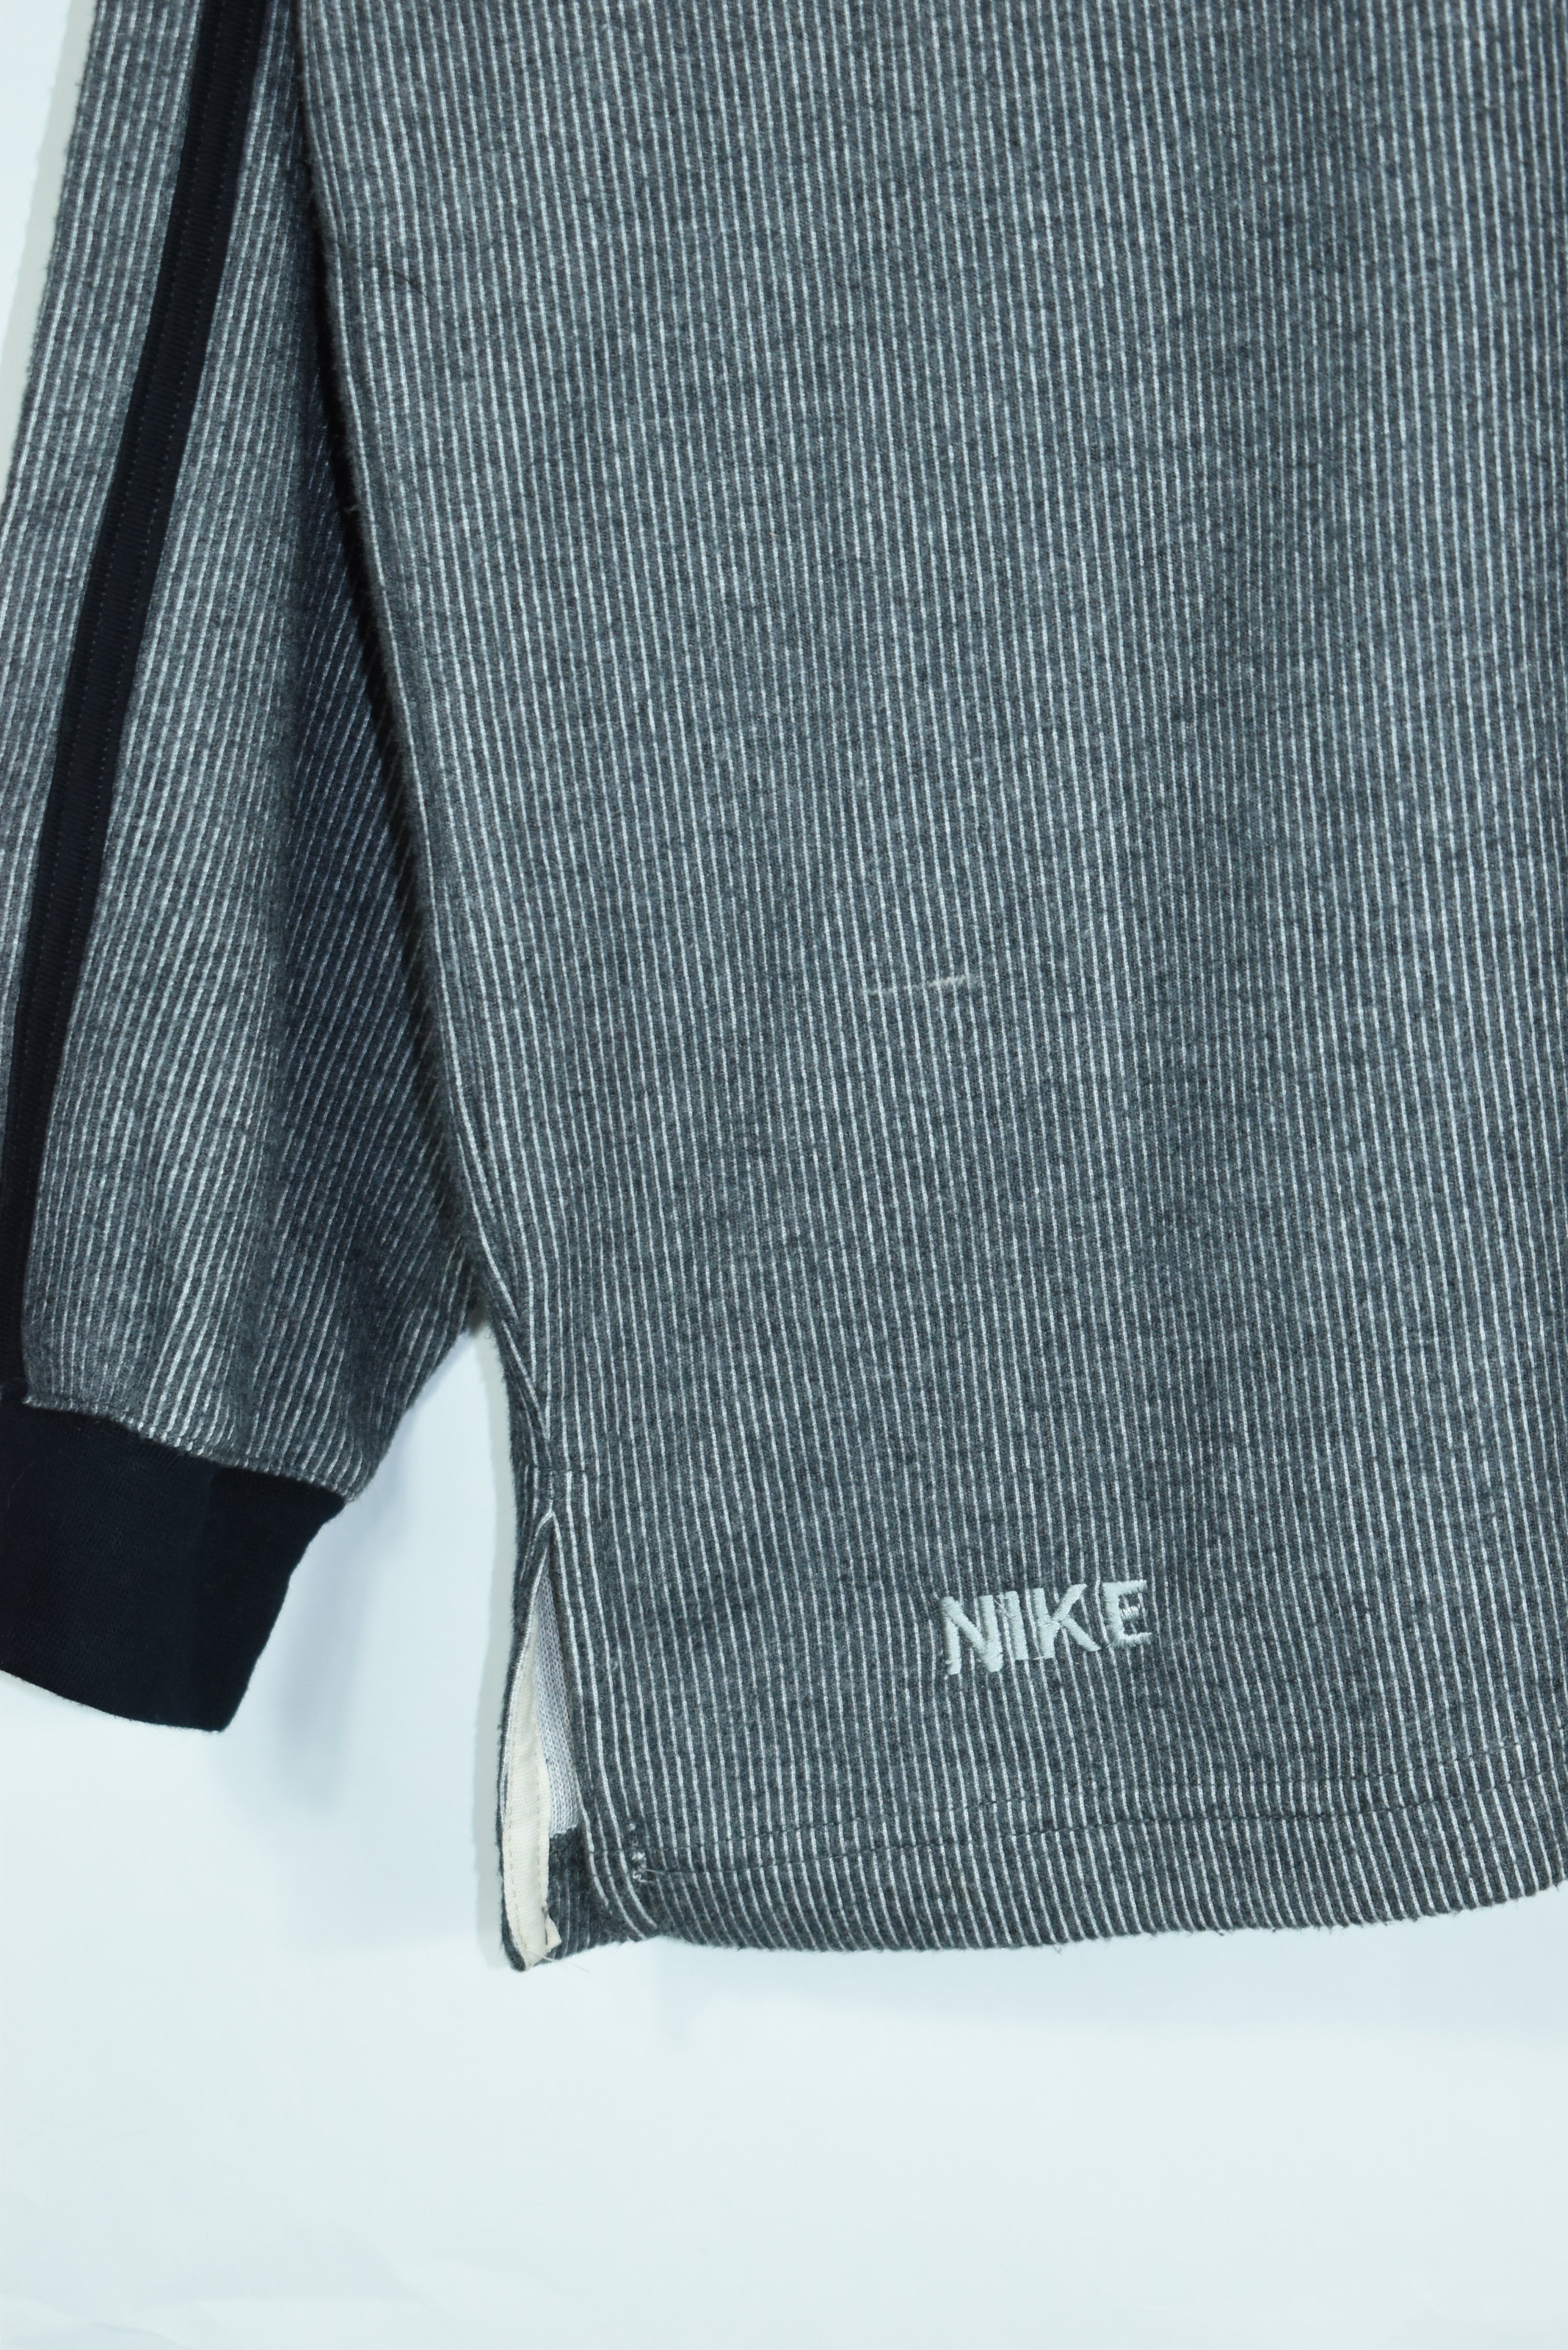 Vintage Nike Embroidery 1/4 Zip Grey Xlarge